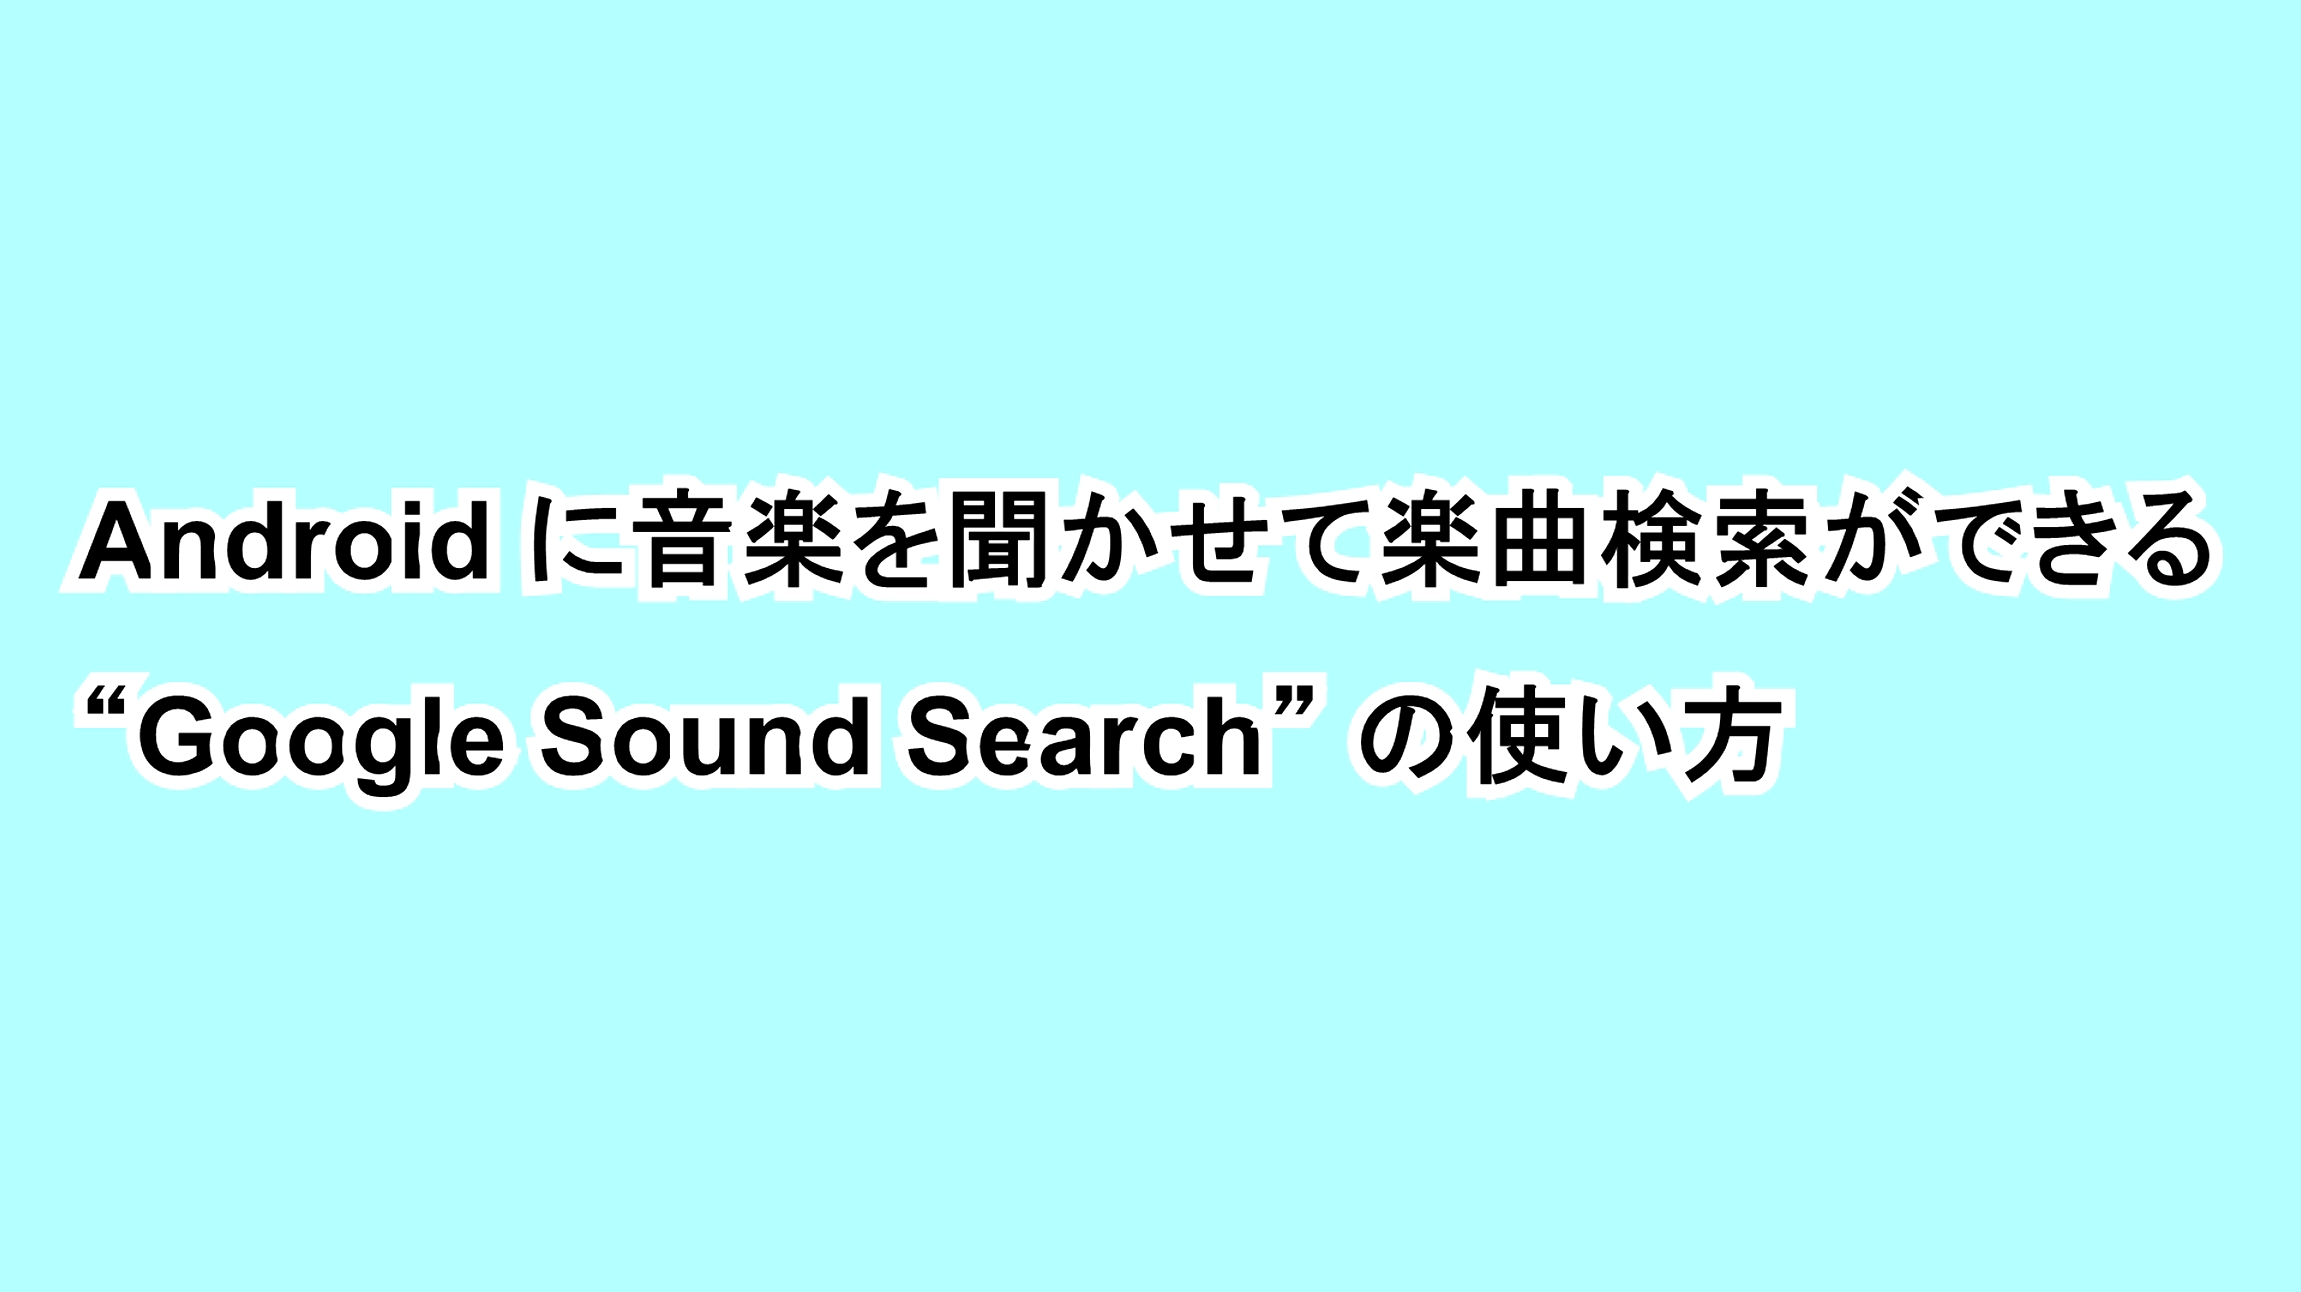 Androidに音楽を聞かせて楽曲検索ができる“Google Sound Search”の使い方